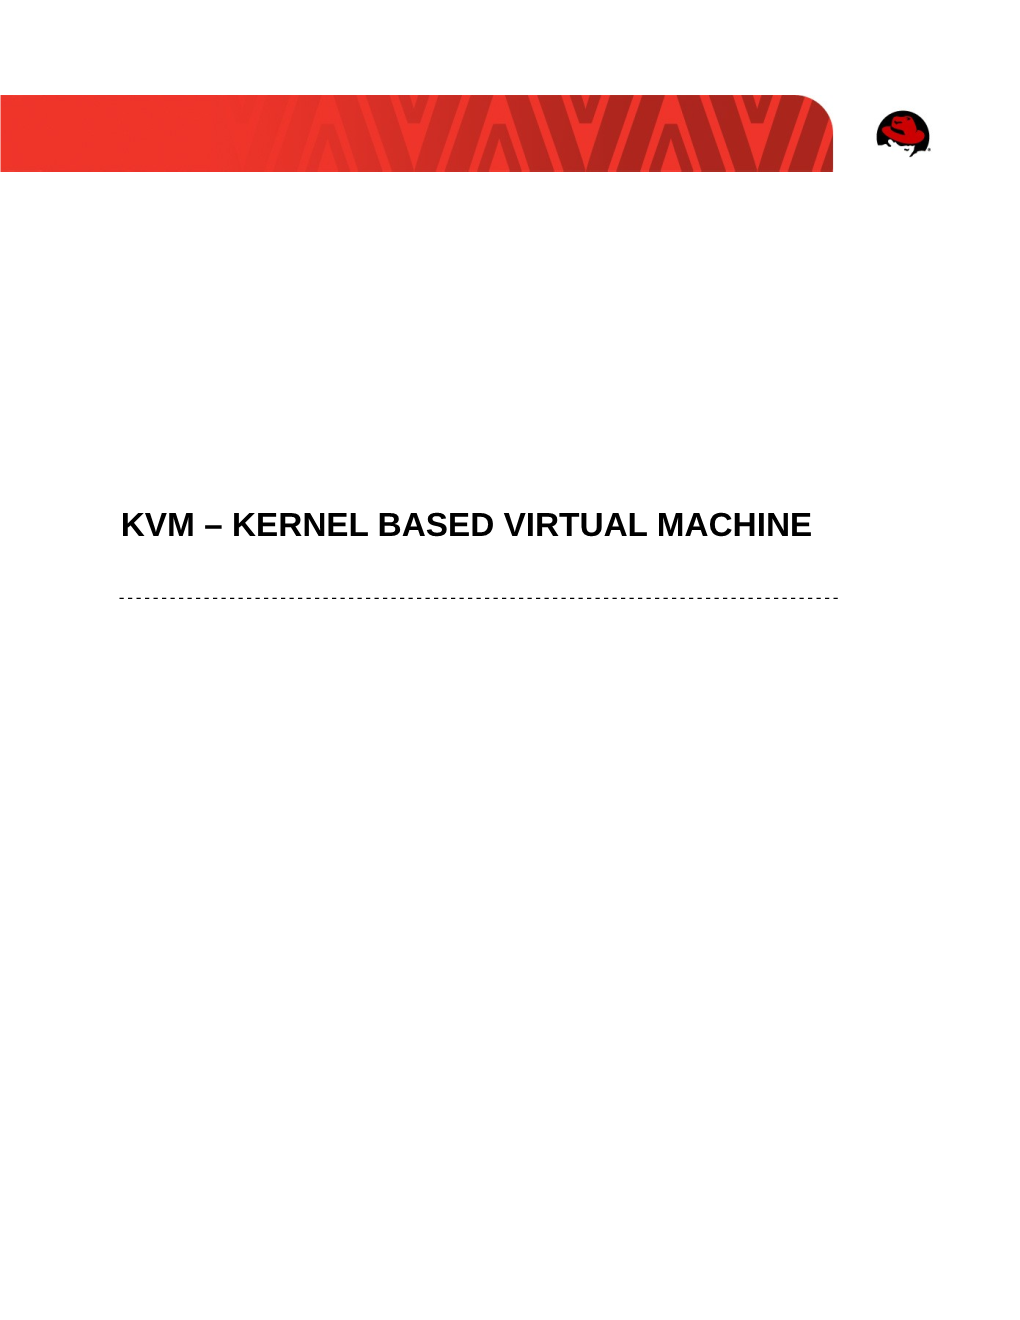 Kvm – Kernel Based Virtual Machine